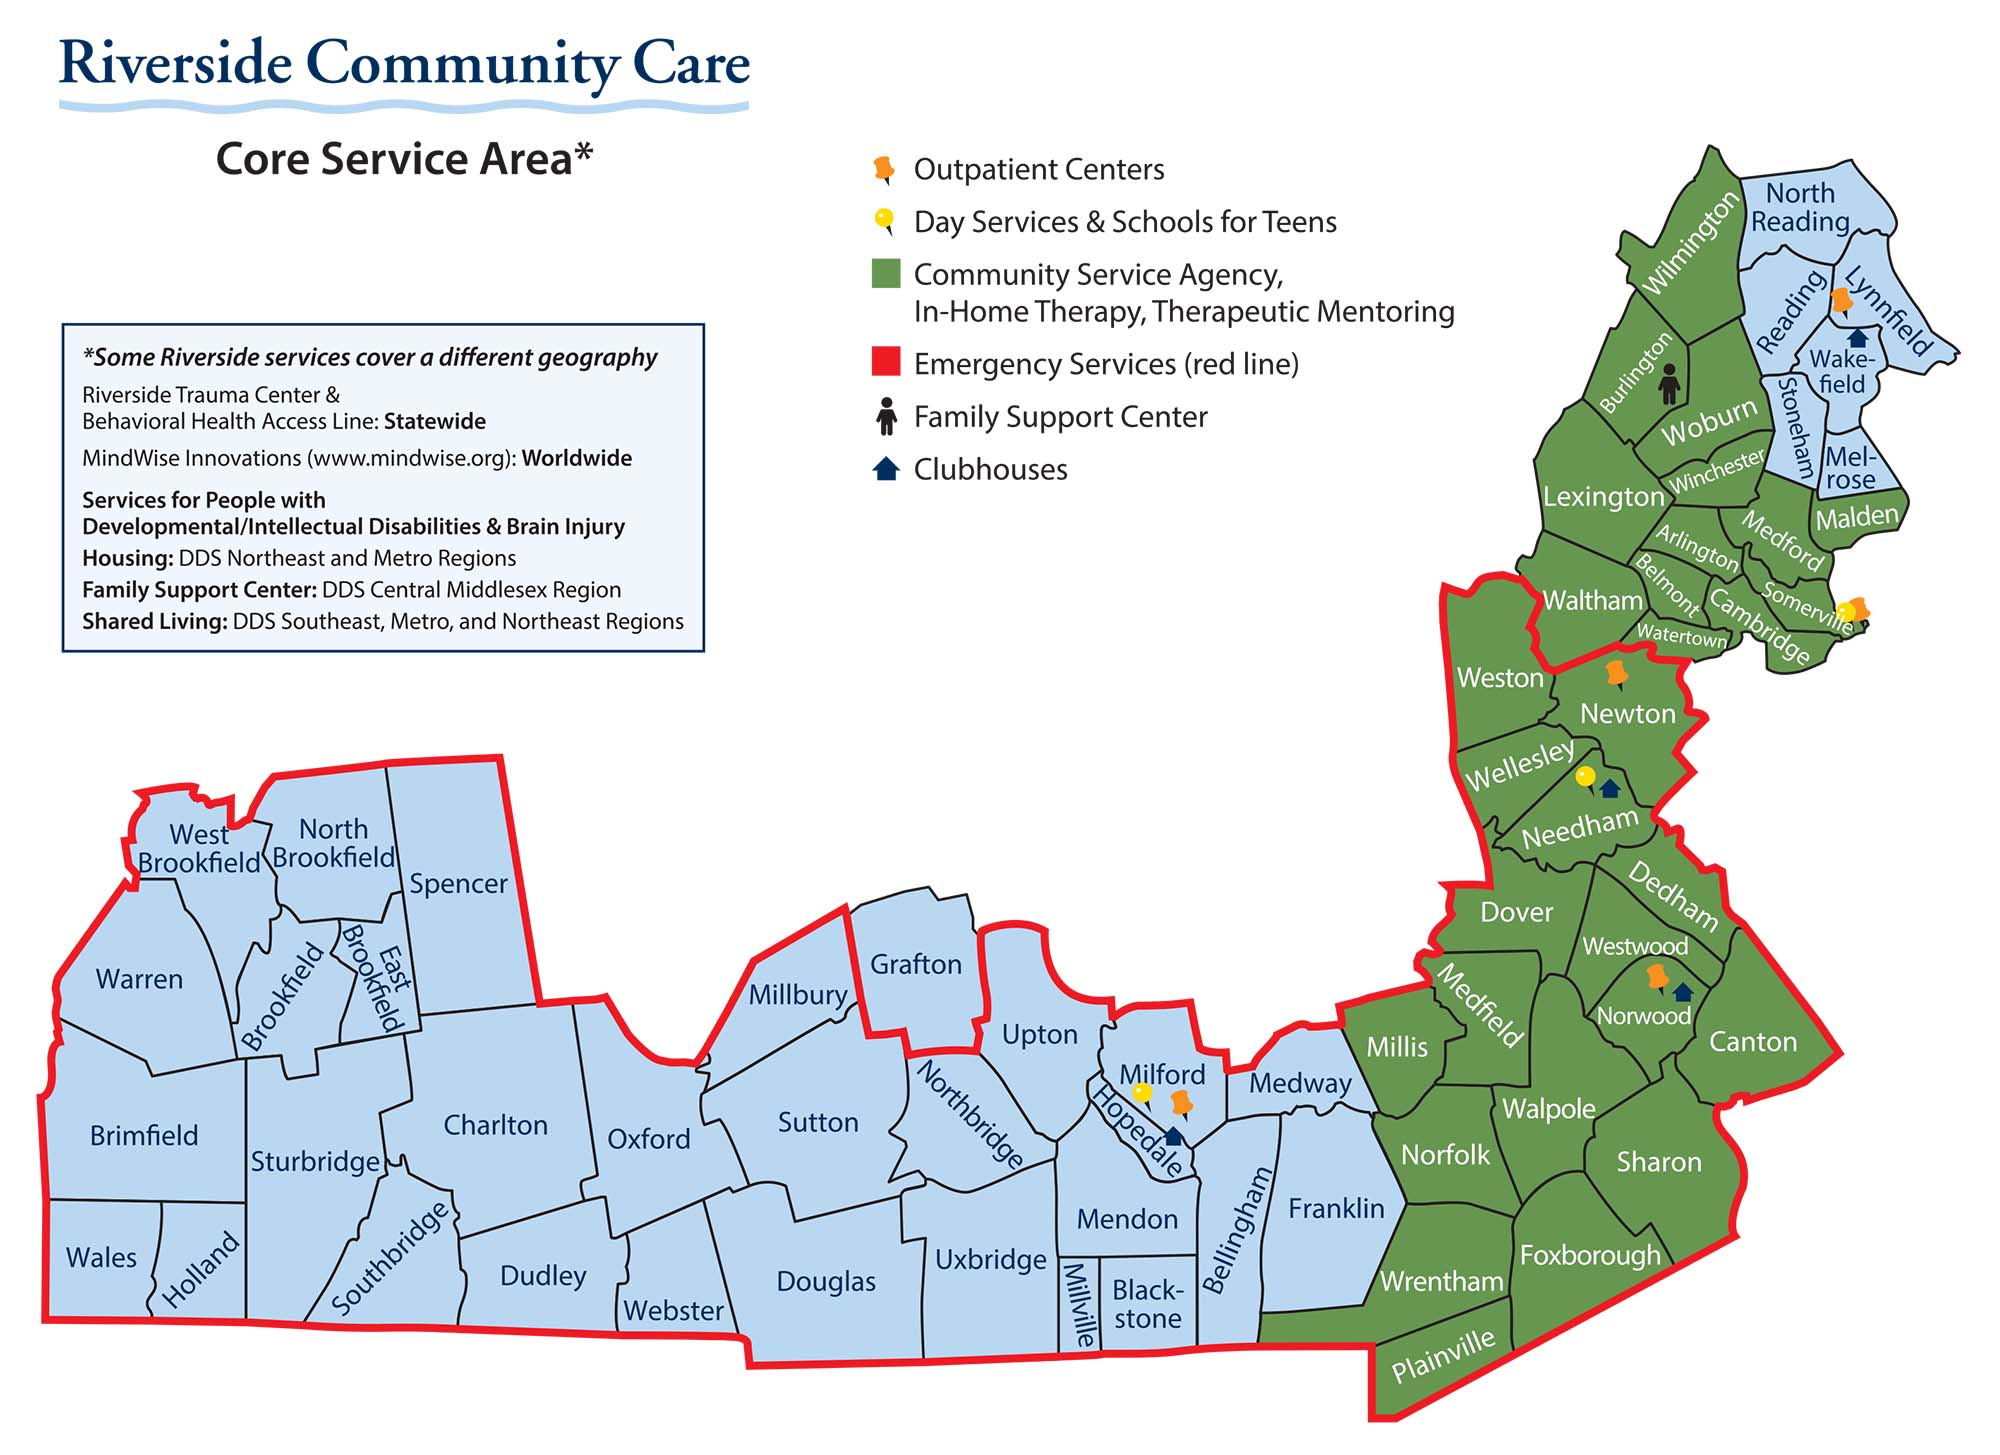 Riverside Community Care Core Service Areas